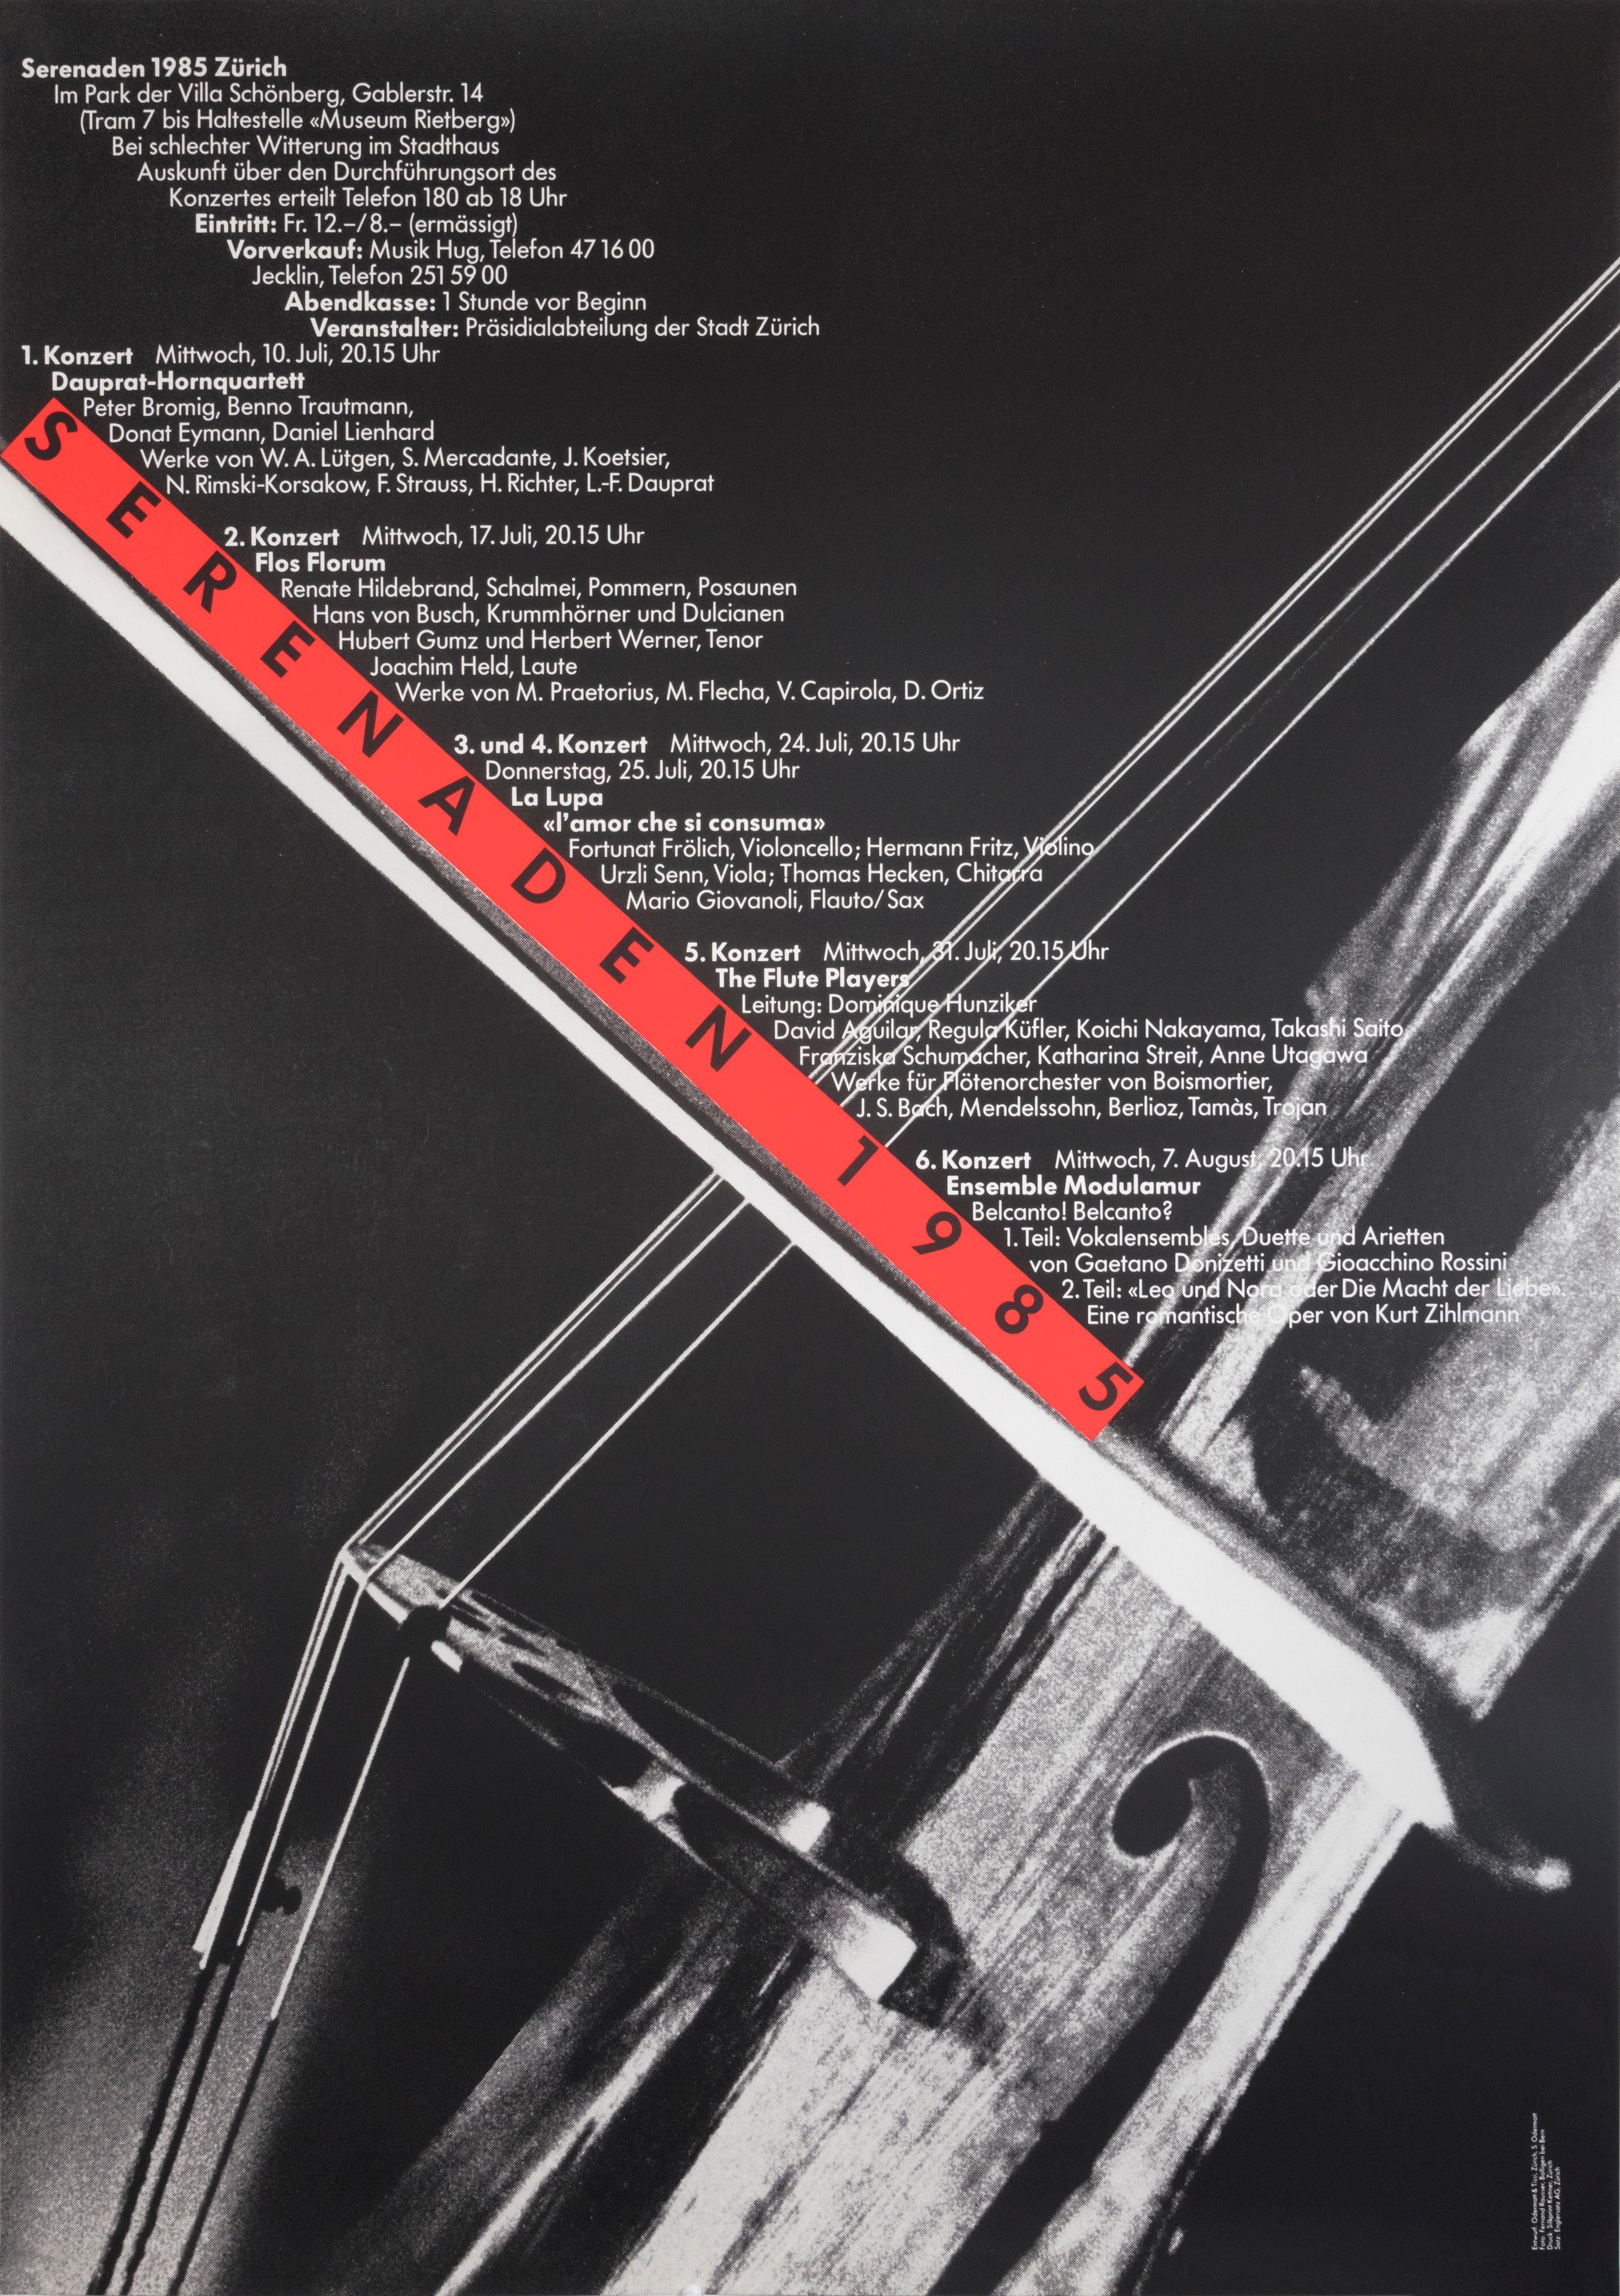 "Serenaden 1985" Swiss Post Modern Music Festival Cello Original Vintage Poster - Print by Odermatt & Tissi